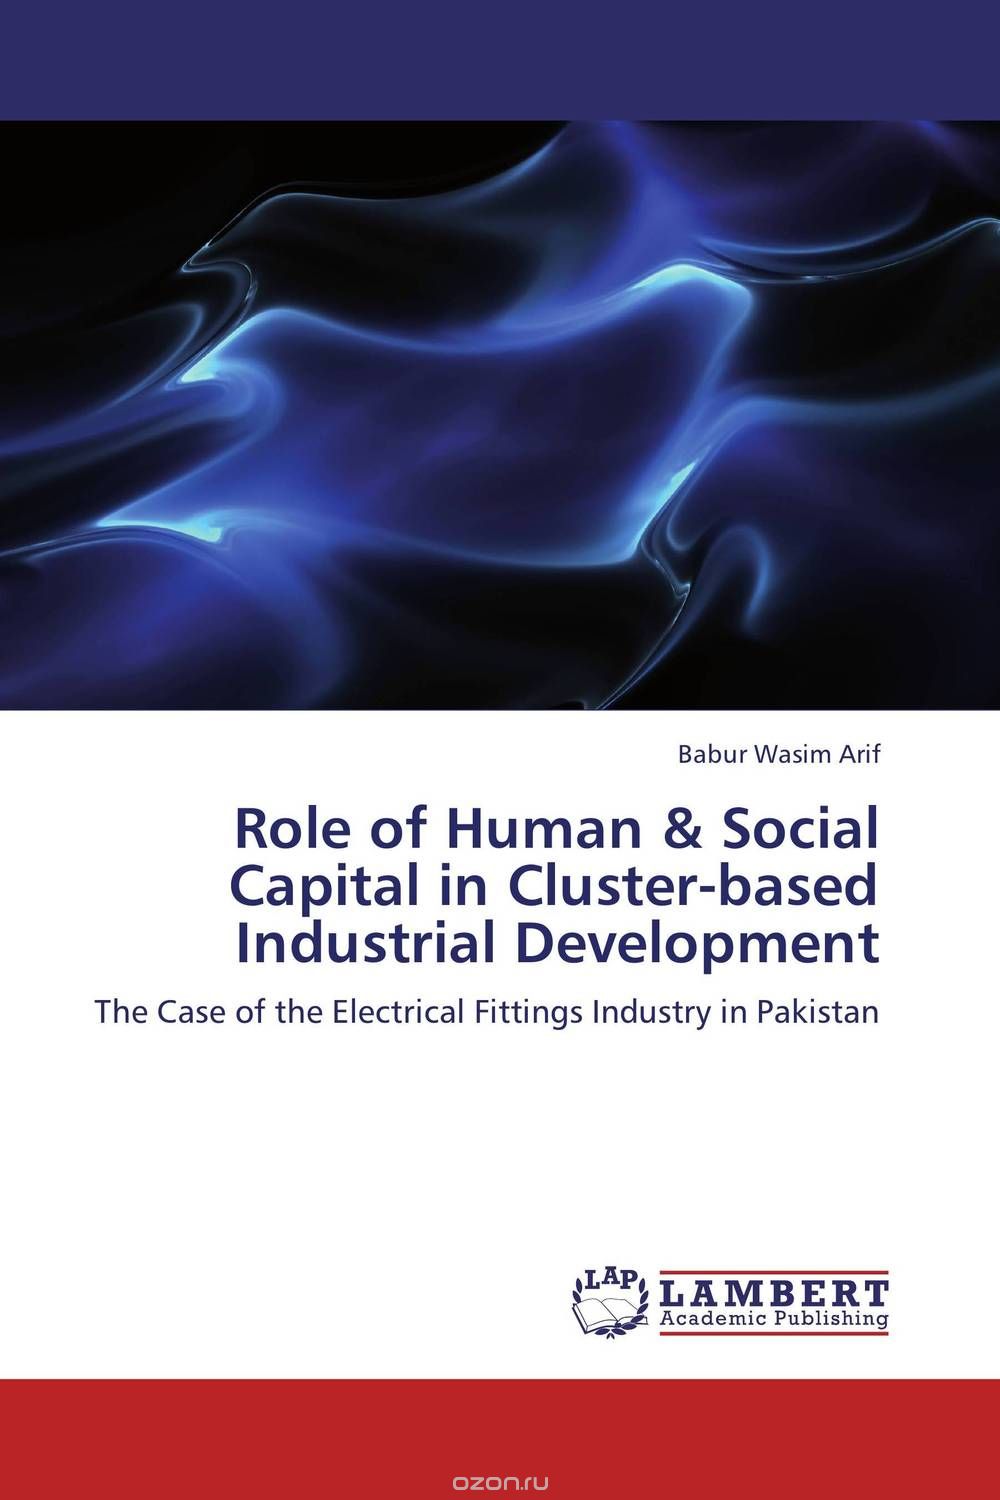 Скачать книгу "Role of Human & Social Capital in Cluster-based Industrial Development"